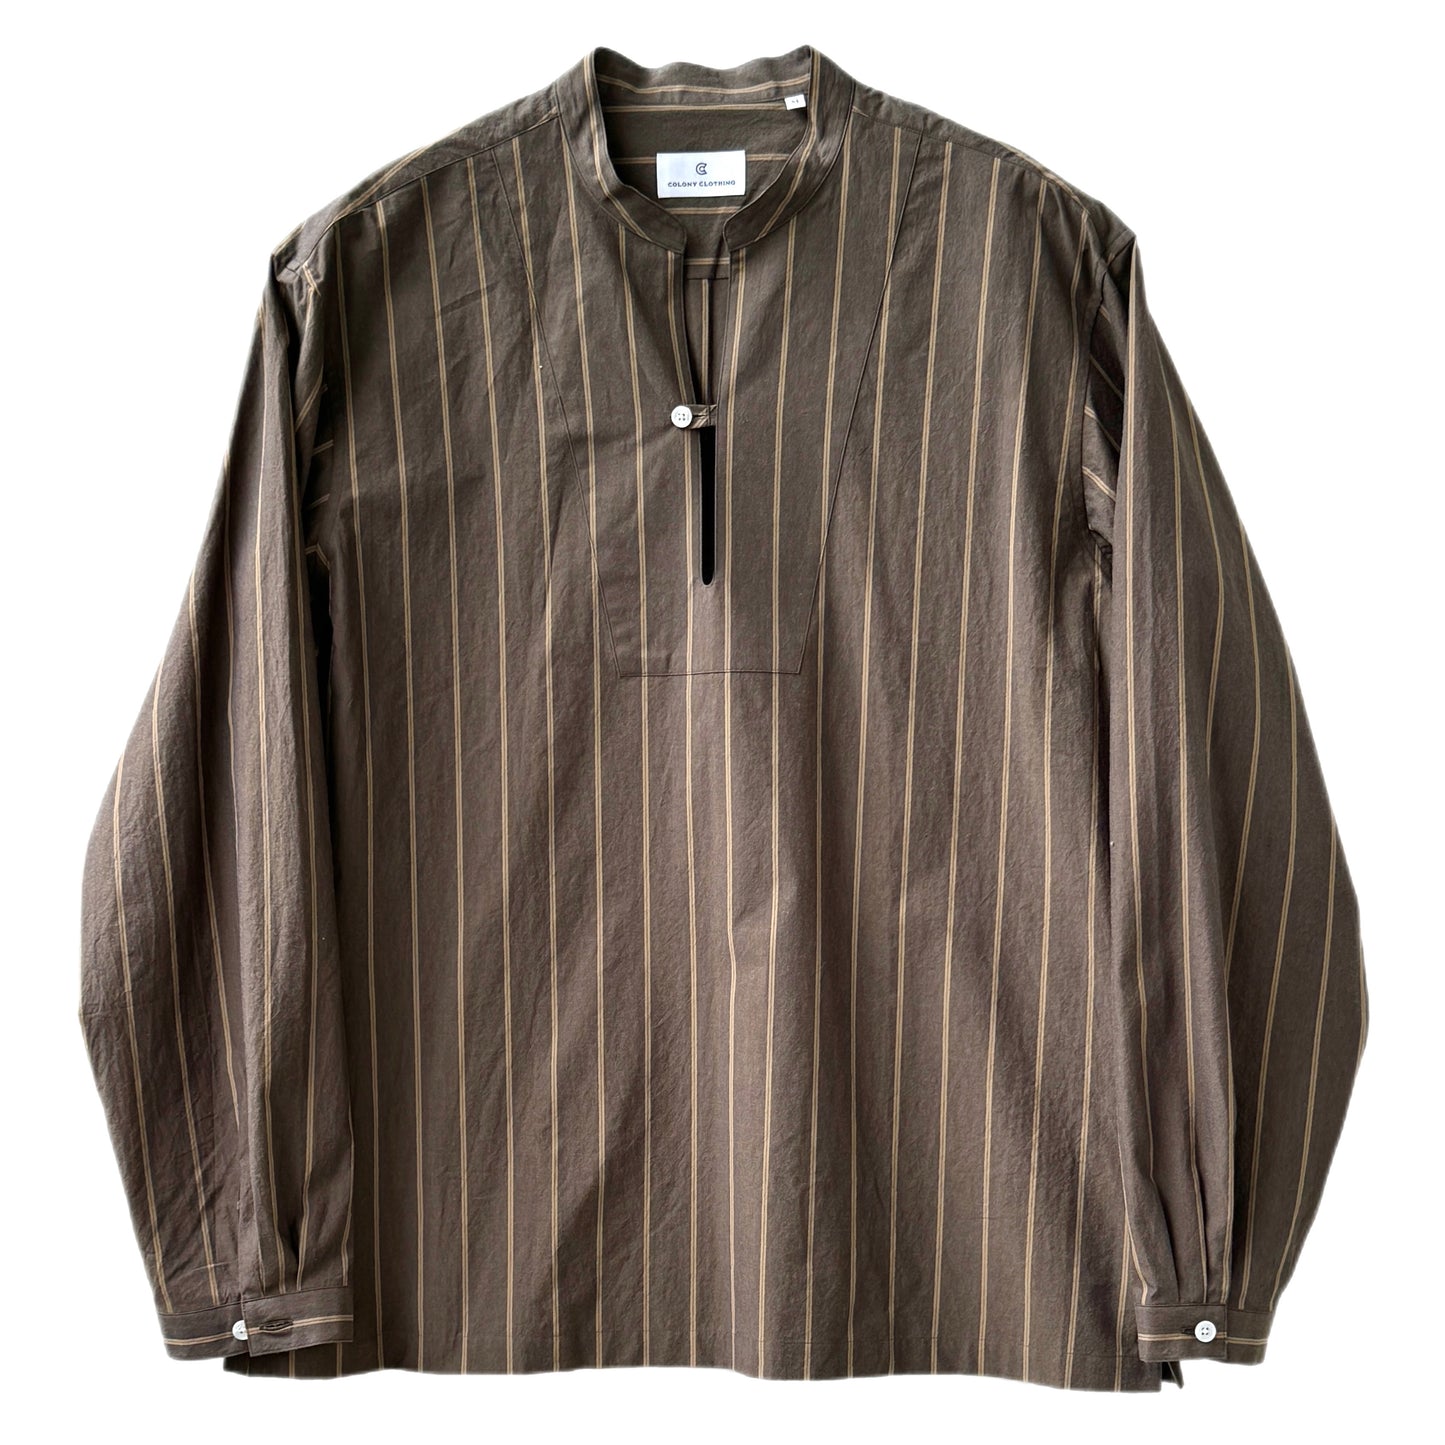 COLONY CLOTHING / コットンストライプ スキッパーシャツ / CC2401-SH06-02